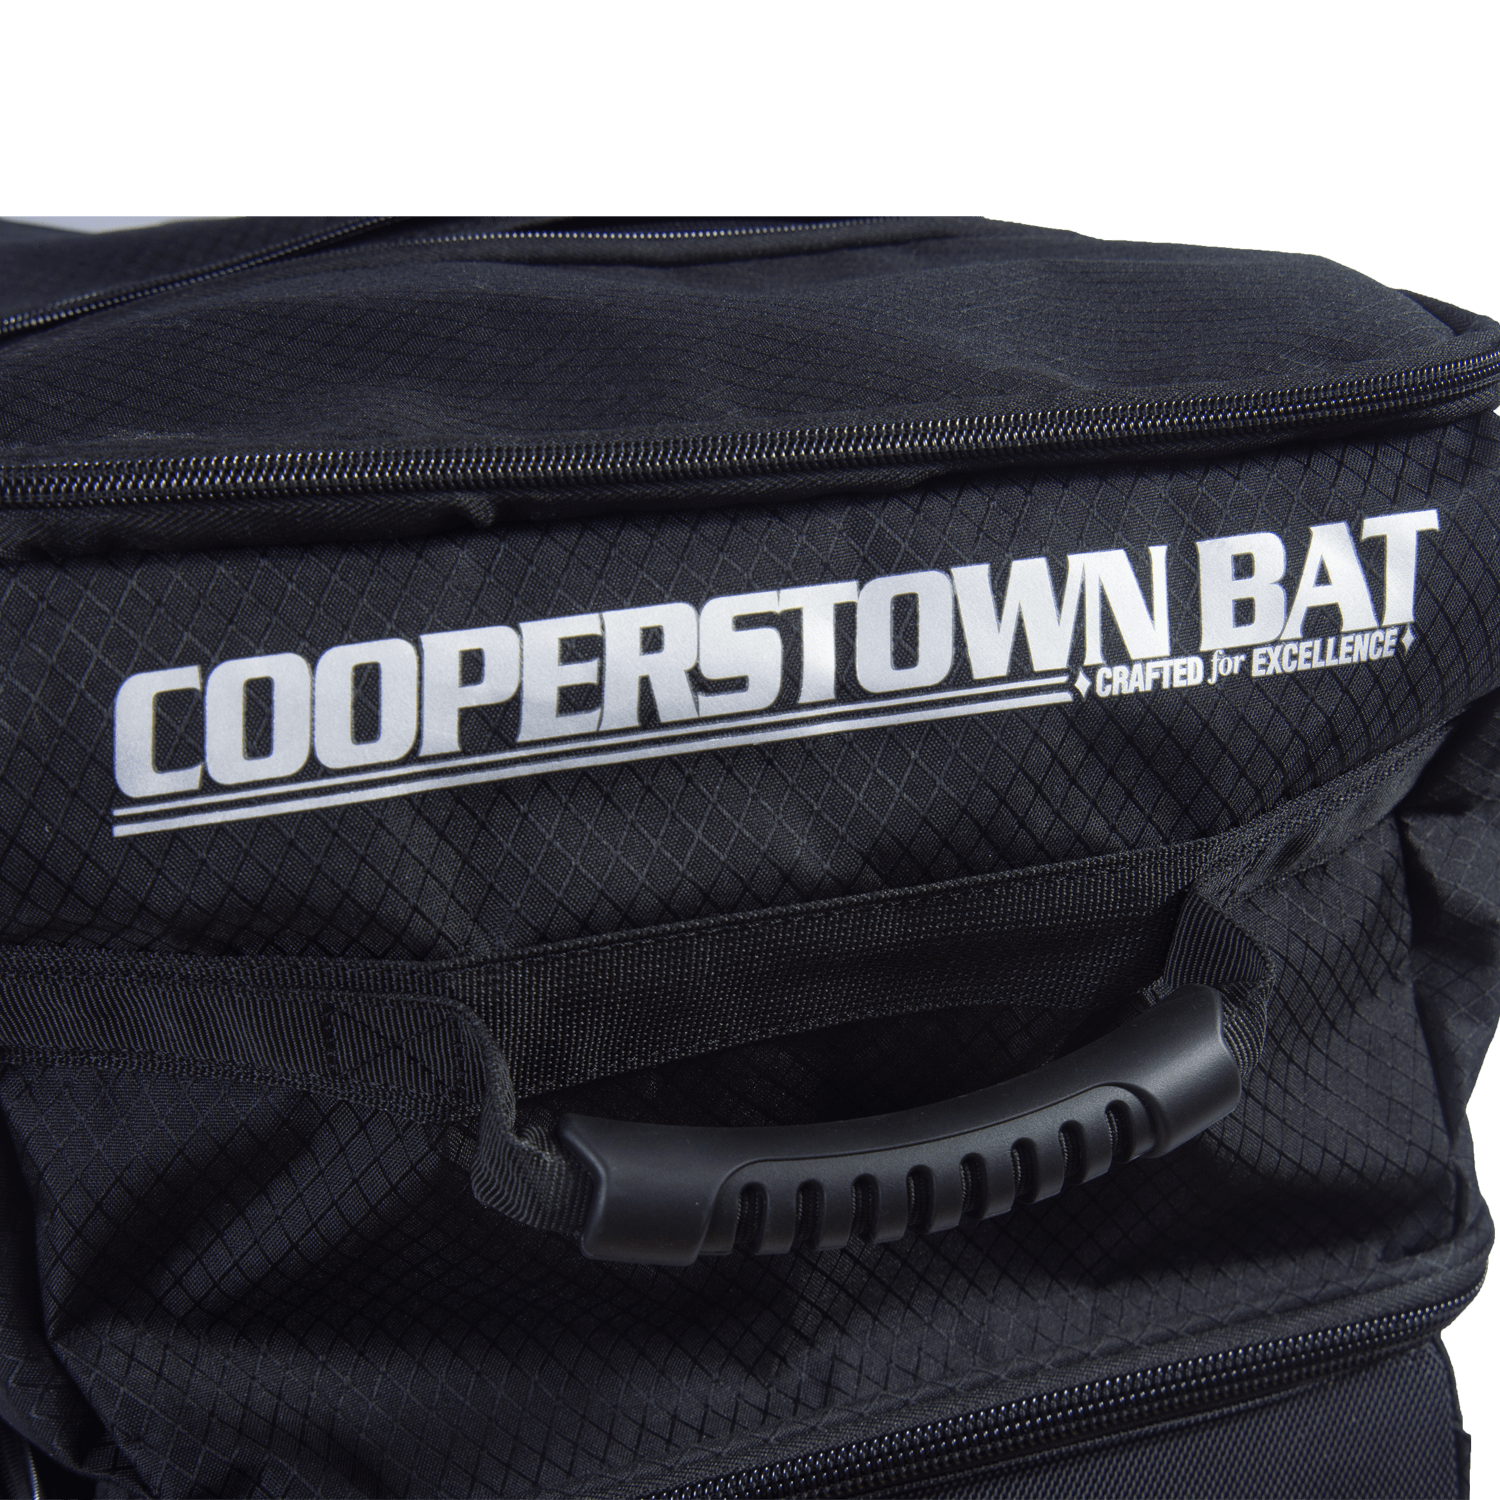 Cooperstown Baseball Equipment Backpack